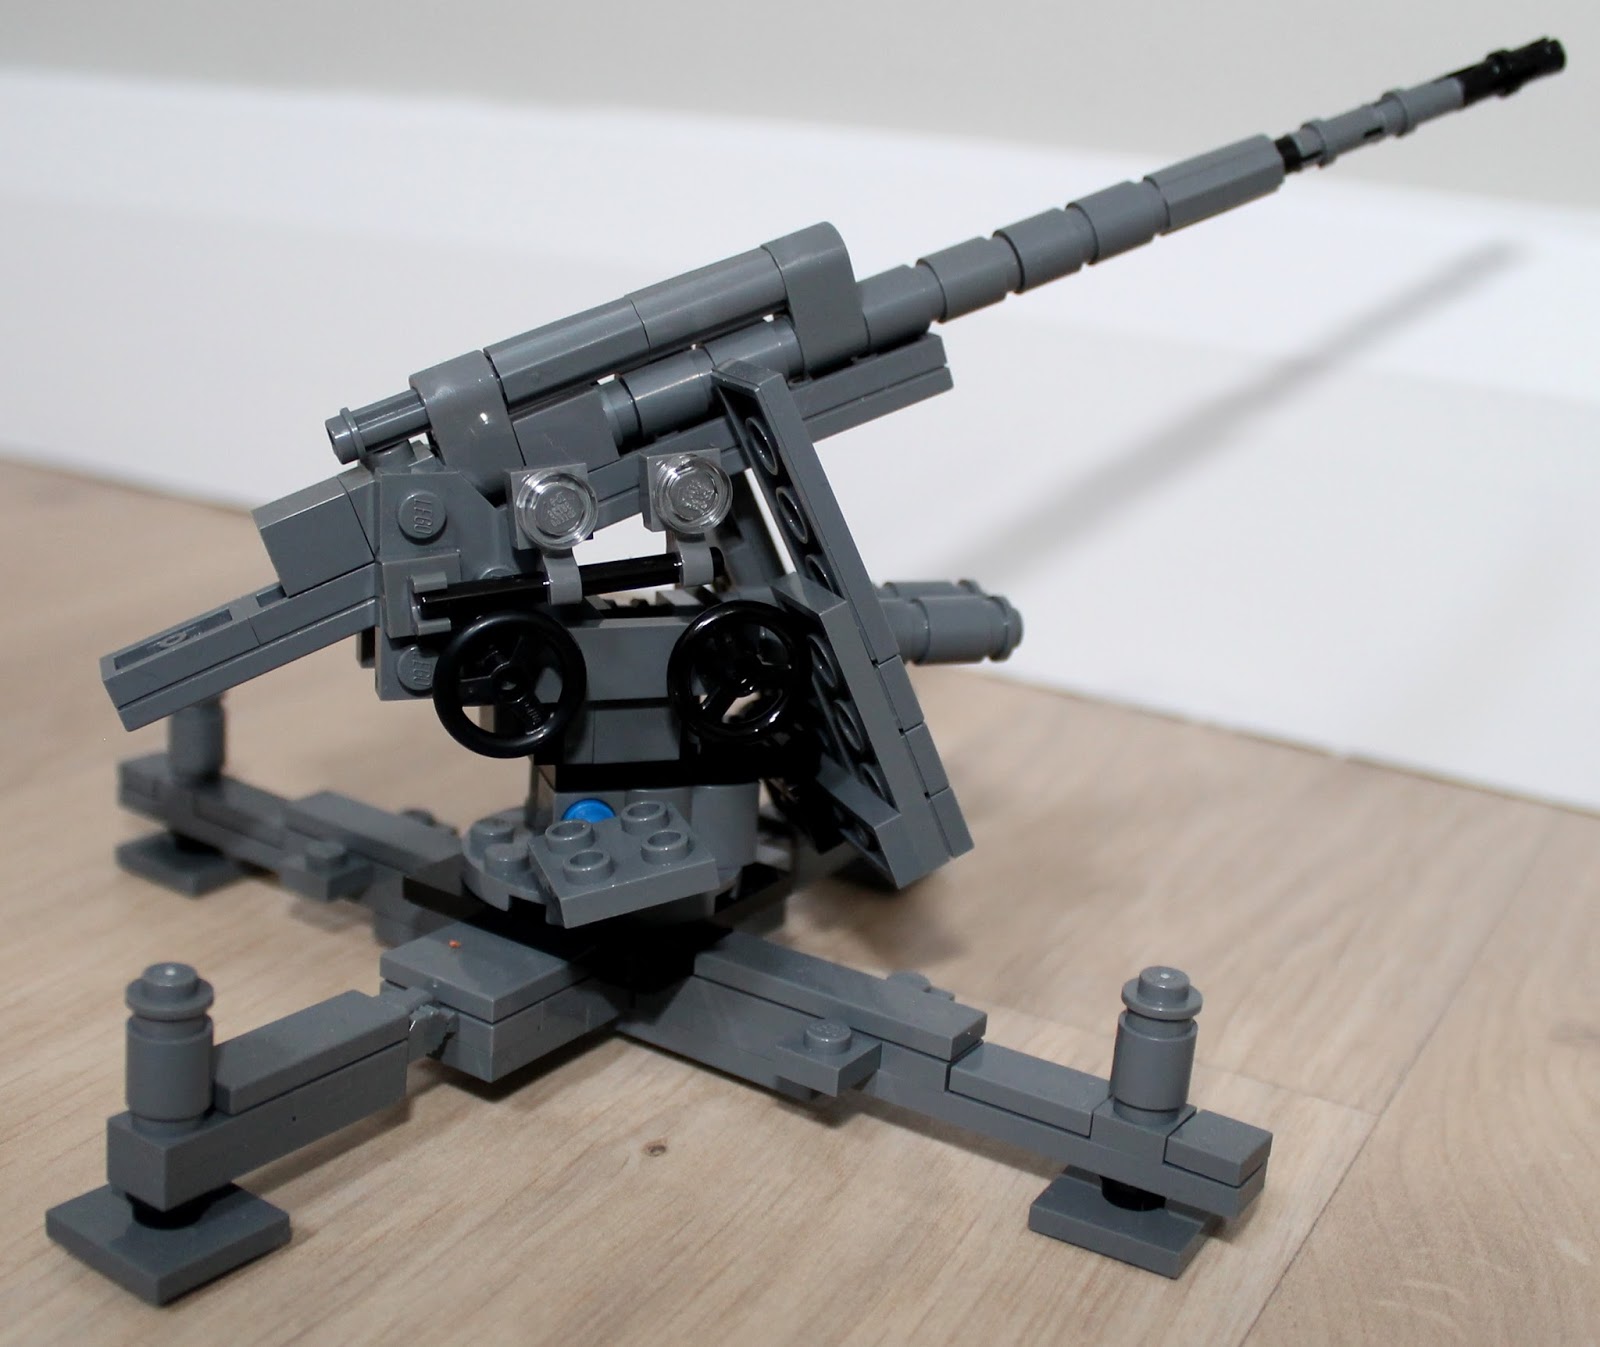 Lego Museums Brickmania Flak 36 88 Cm Anti Aircraft Gun Review